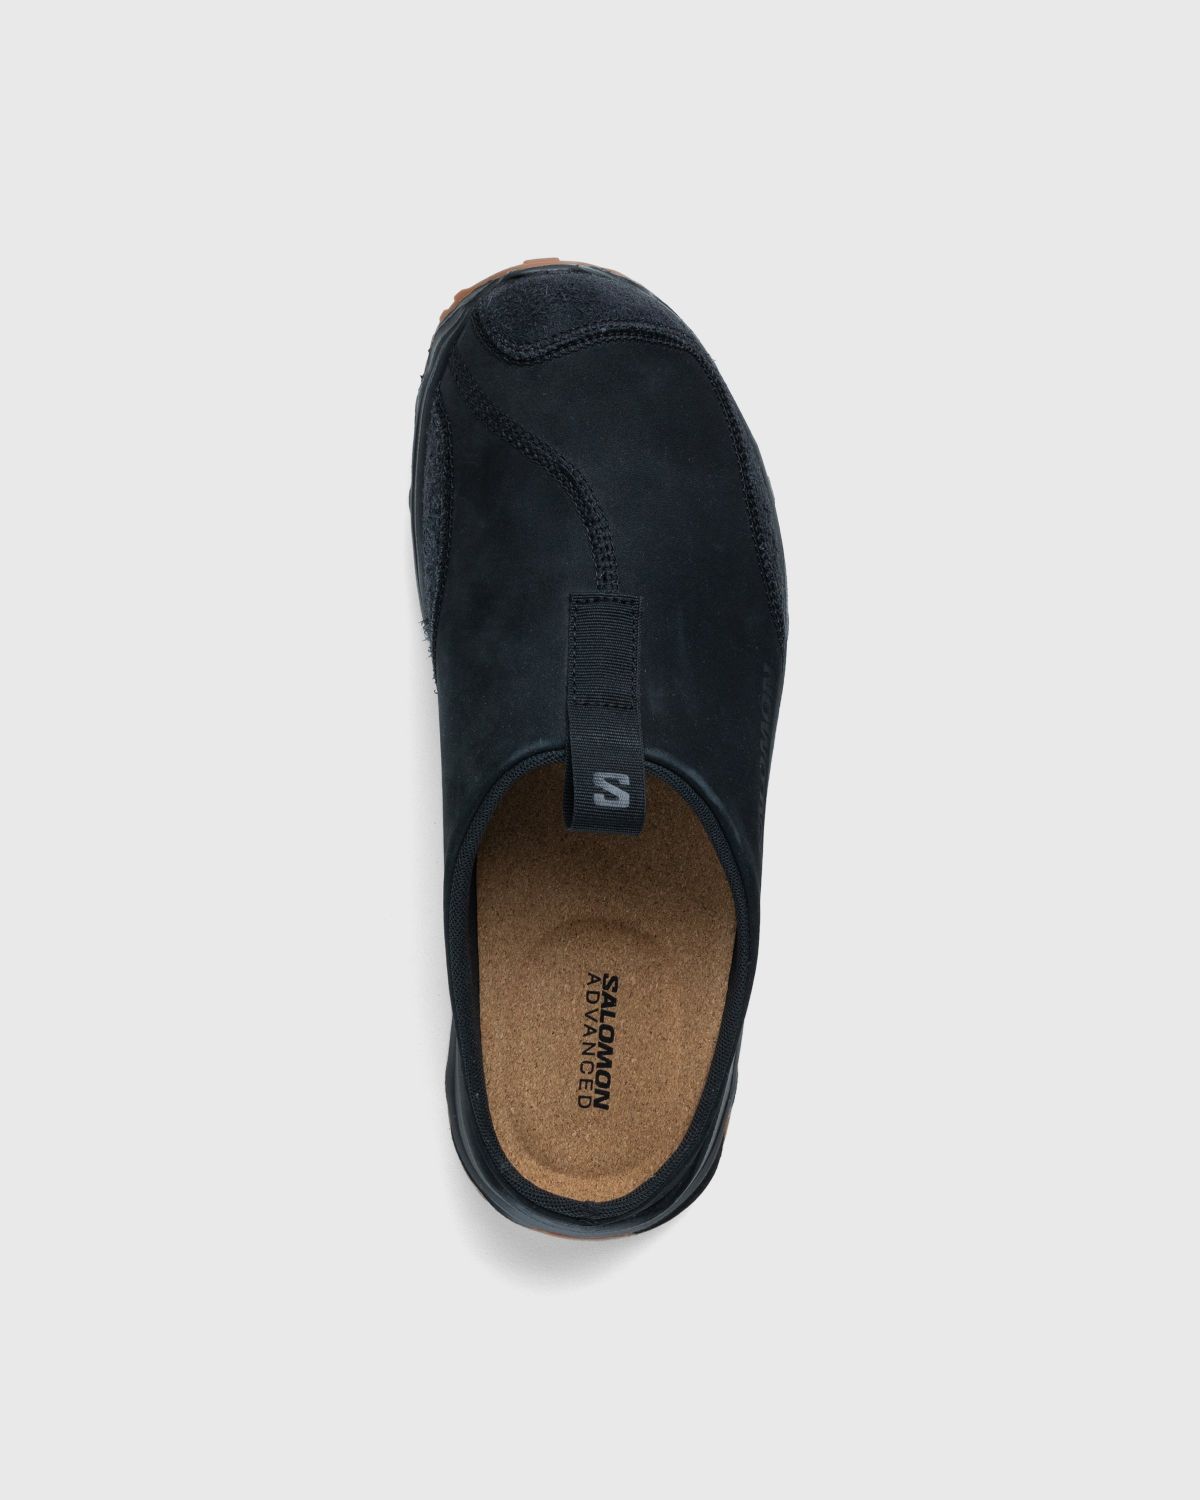 Salomon – RX Slide Leather Advanced Black | Highsnobiety Shop